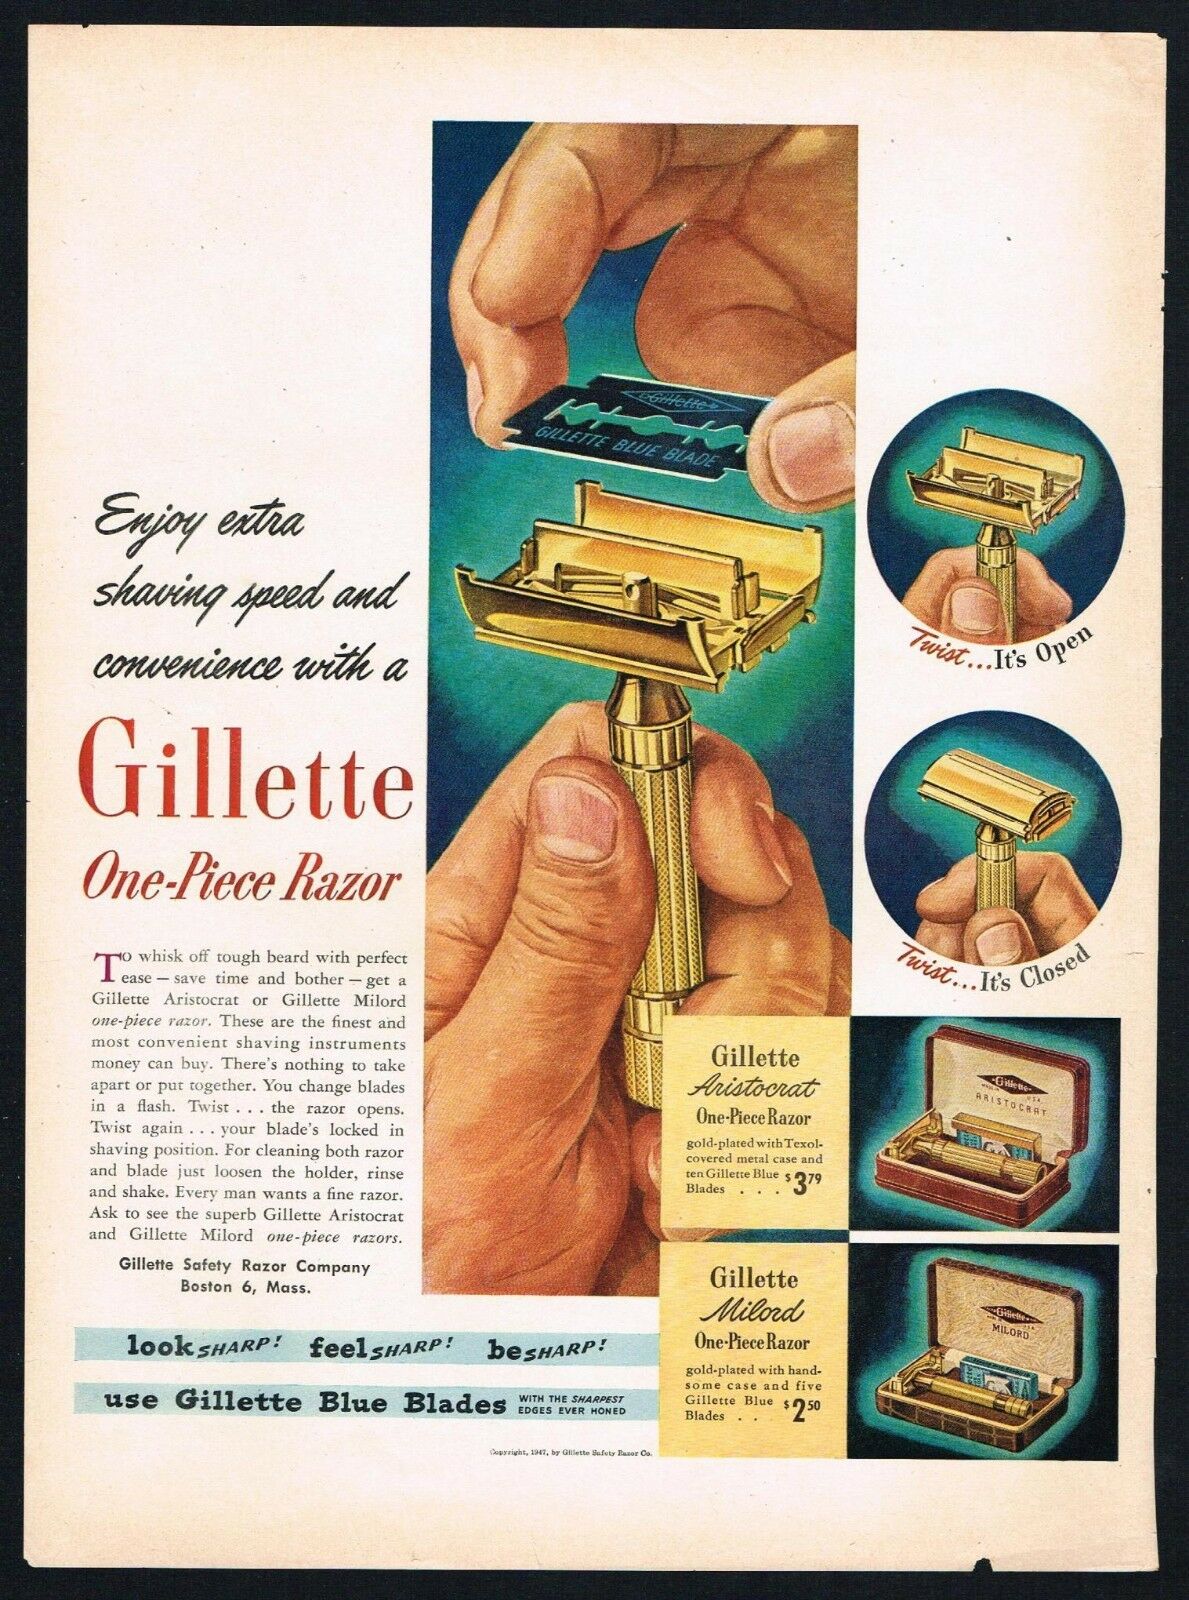 1940's Advertisement Touting the TTO mechanism